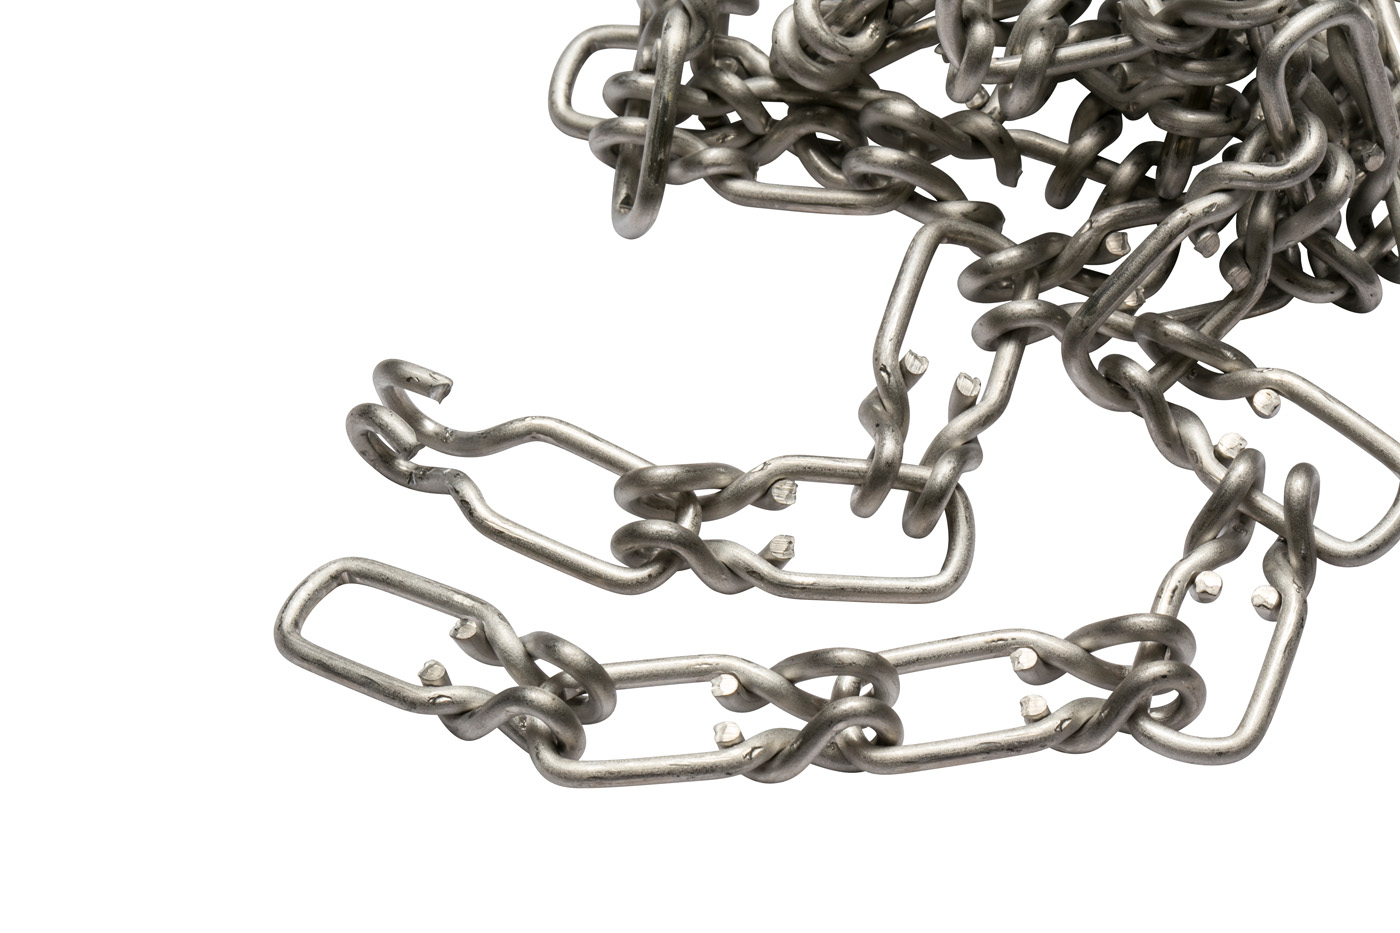 Chain support. Стандарт на Цепочки. Европейский стандарт цепей. Chains аббревиатура. 796567 Chain.